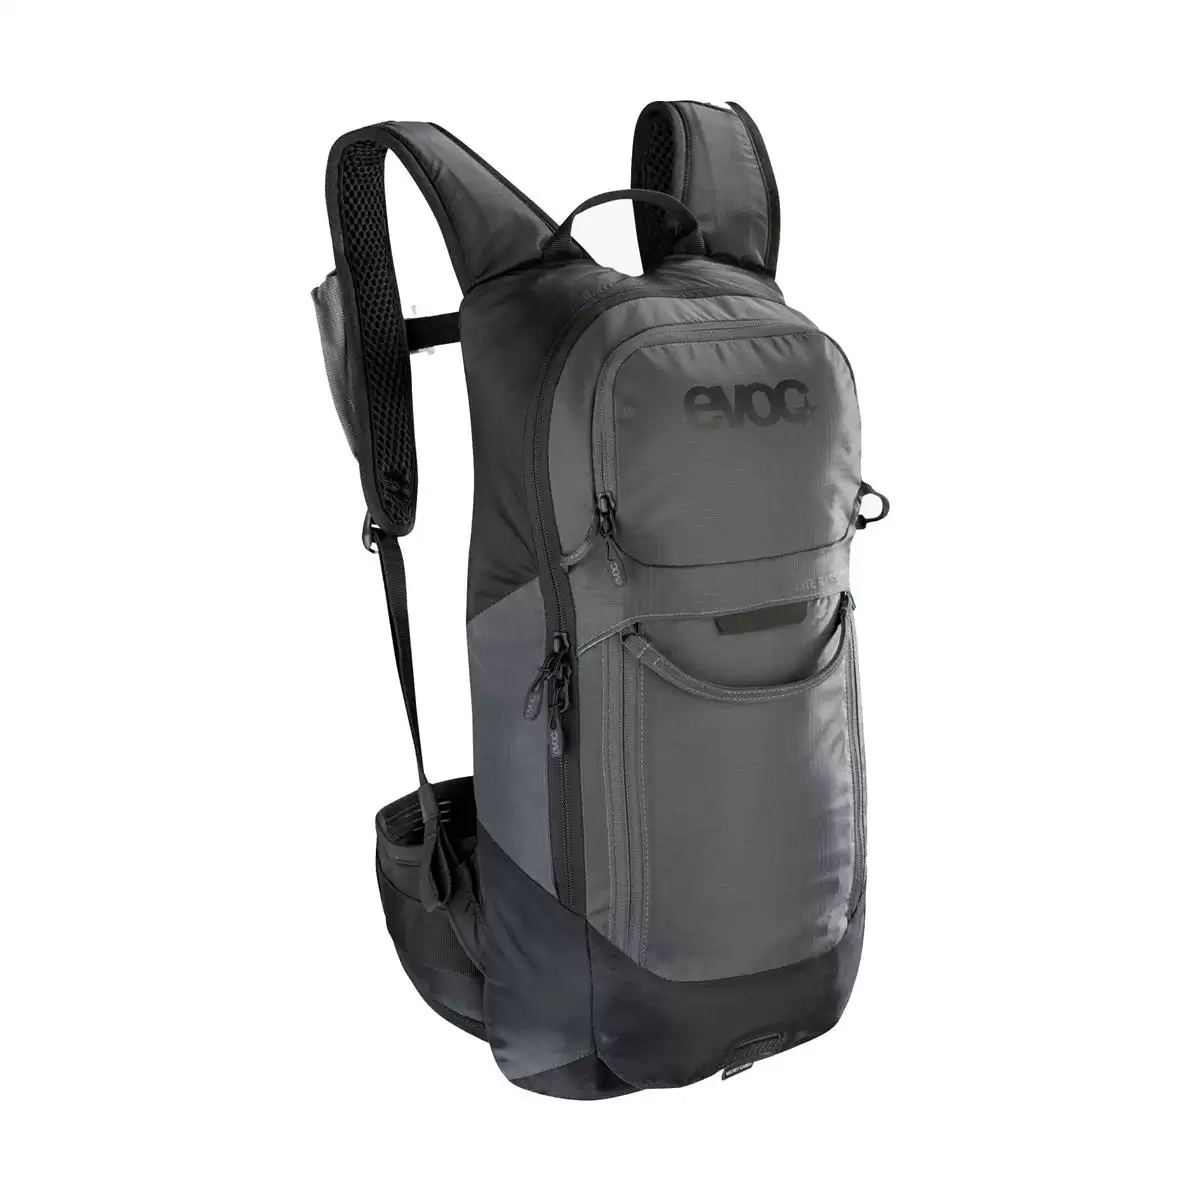 FR Lite Race 10 Backpack With Back Protector 10L Grey/Black Size M/L - image